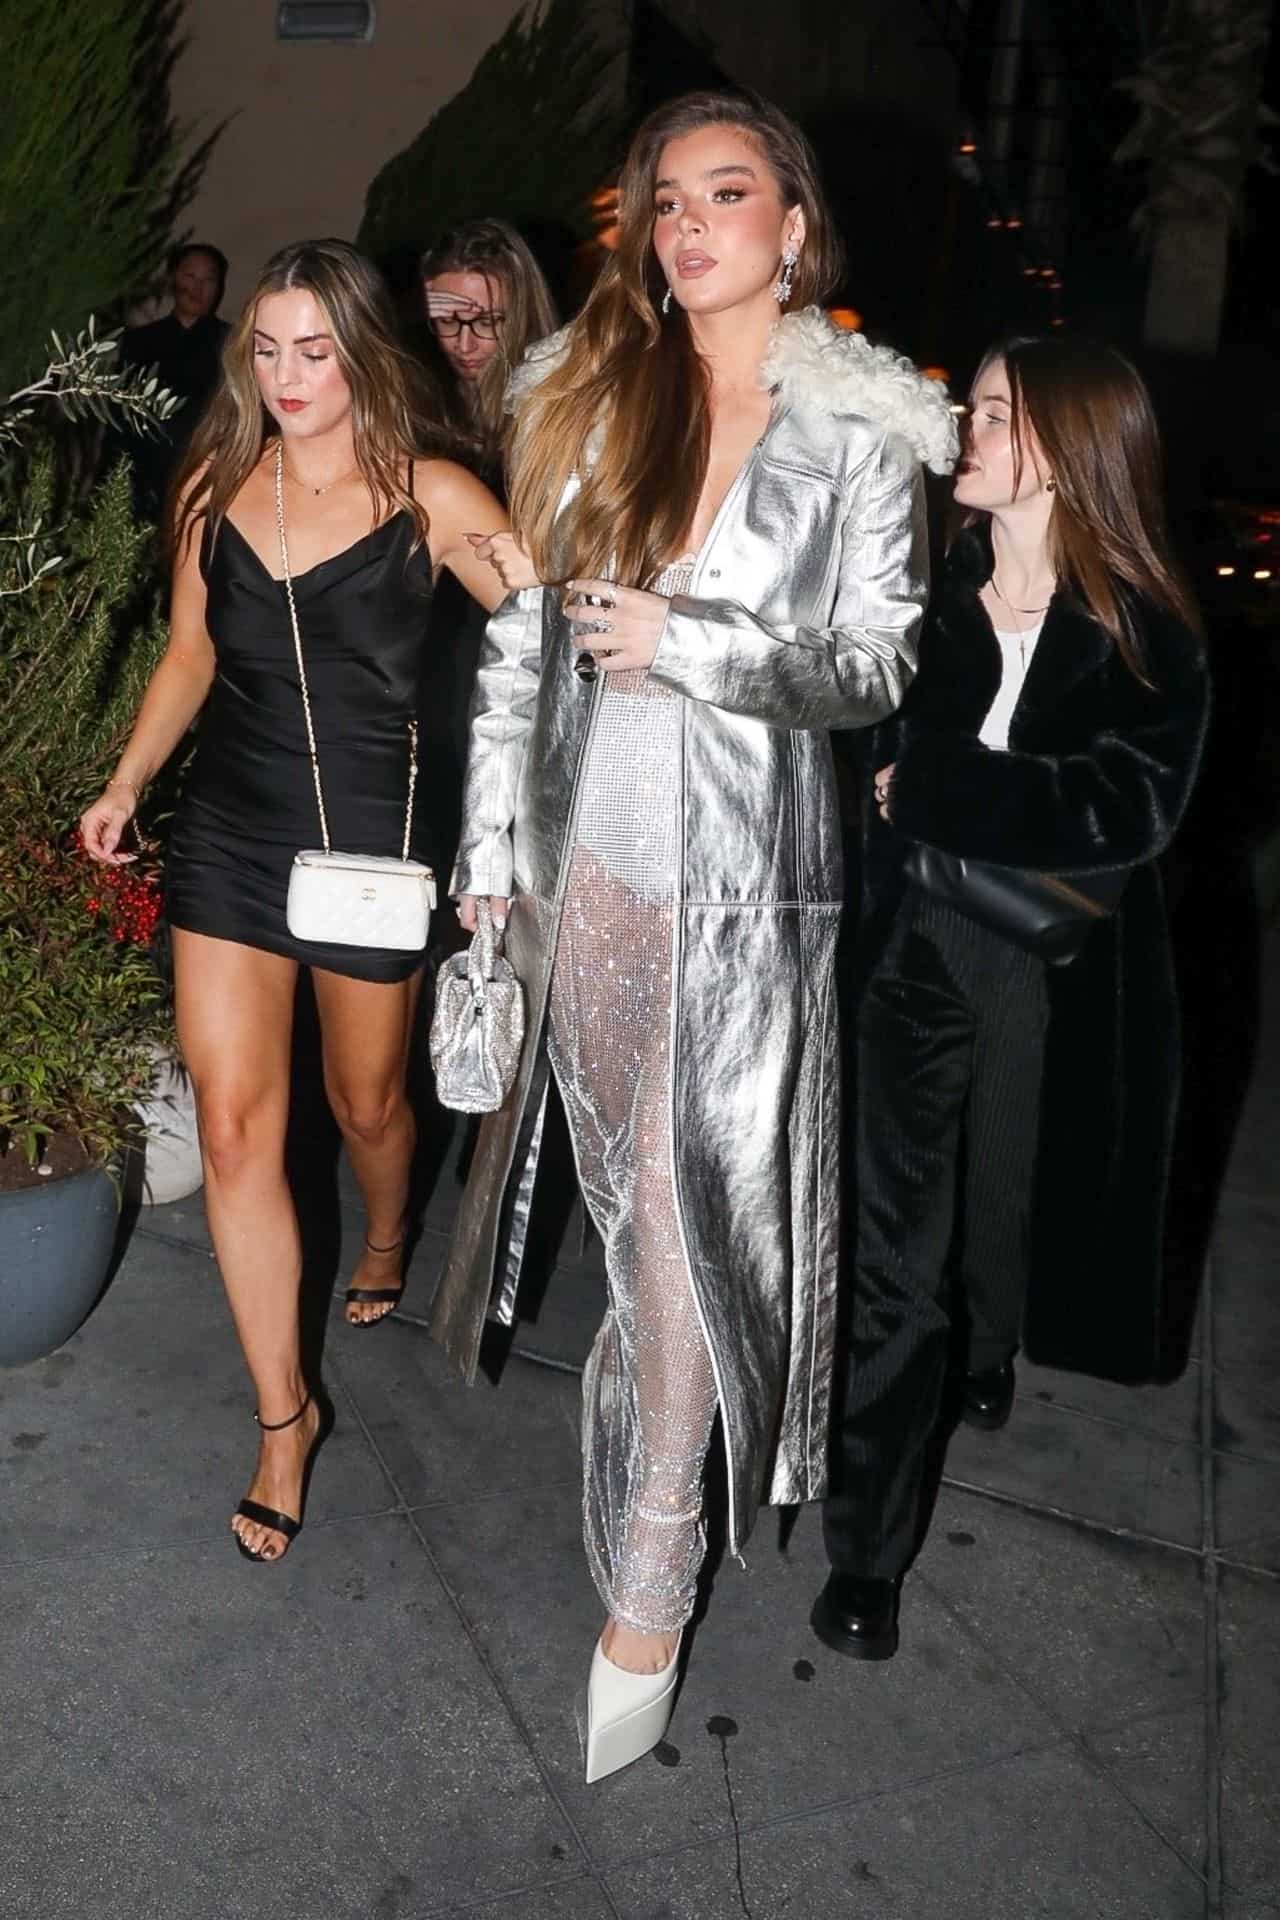 Hailee Steinfeld in a Sheer Silver Dress Celebrating her 26th Birthday